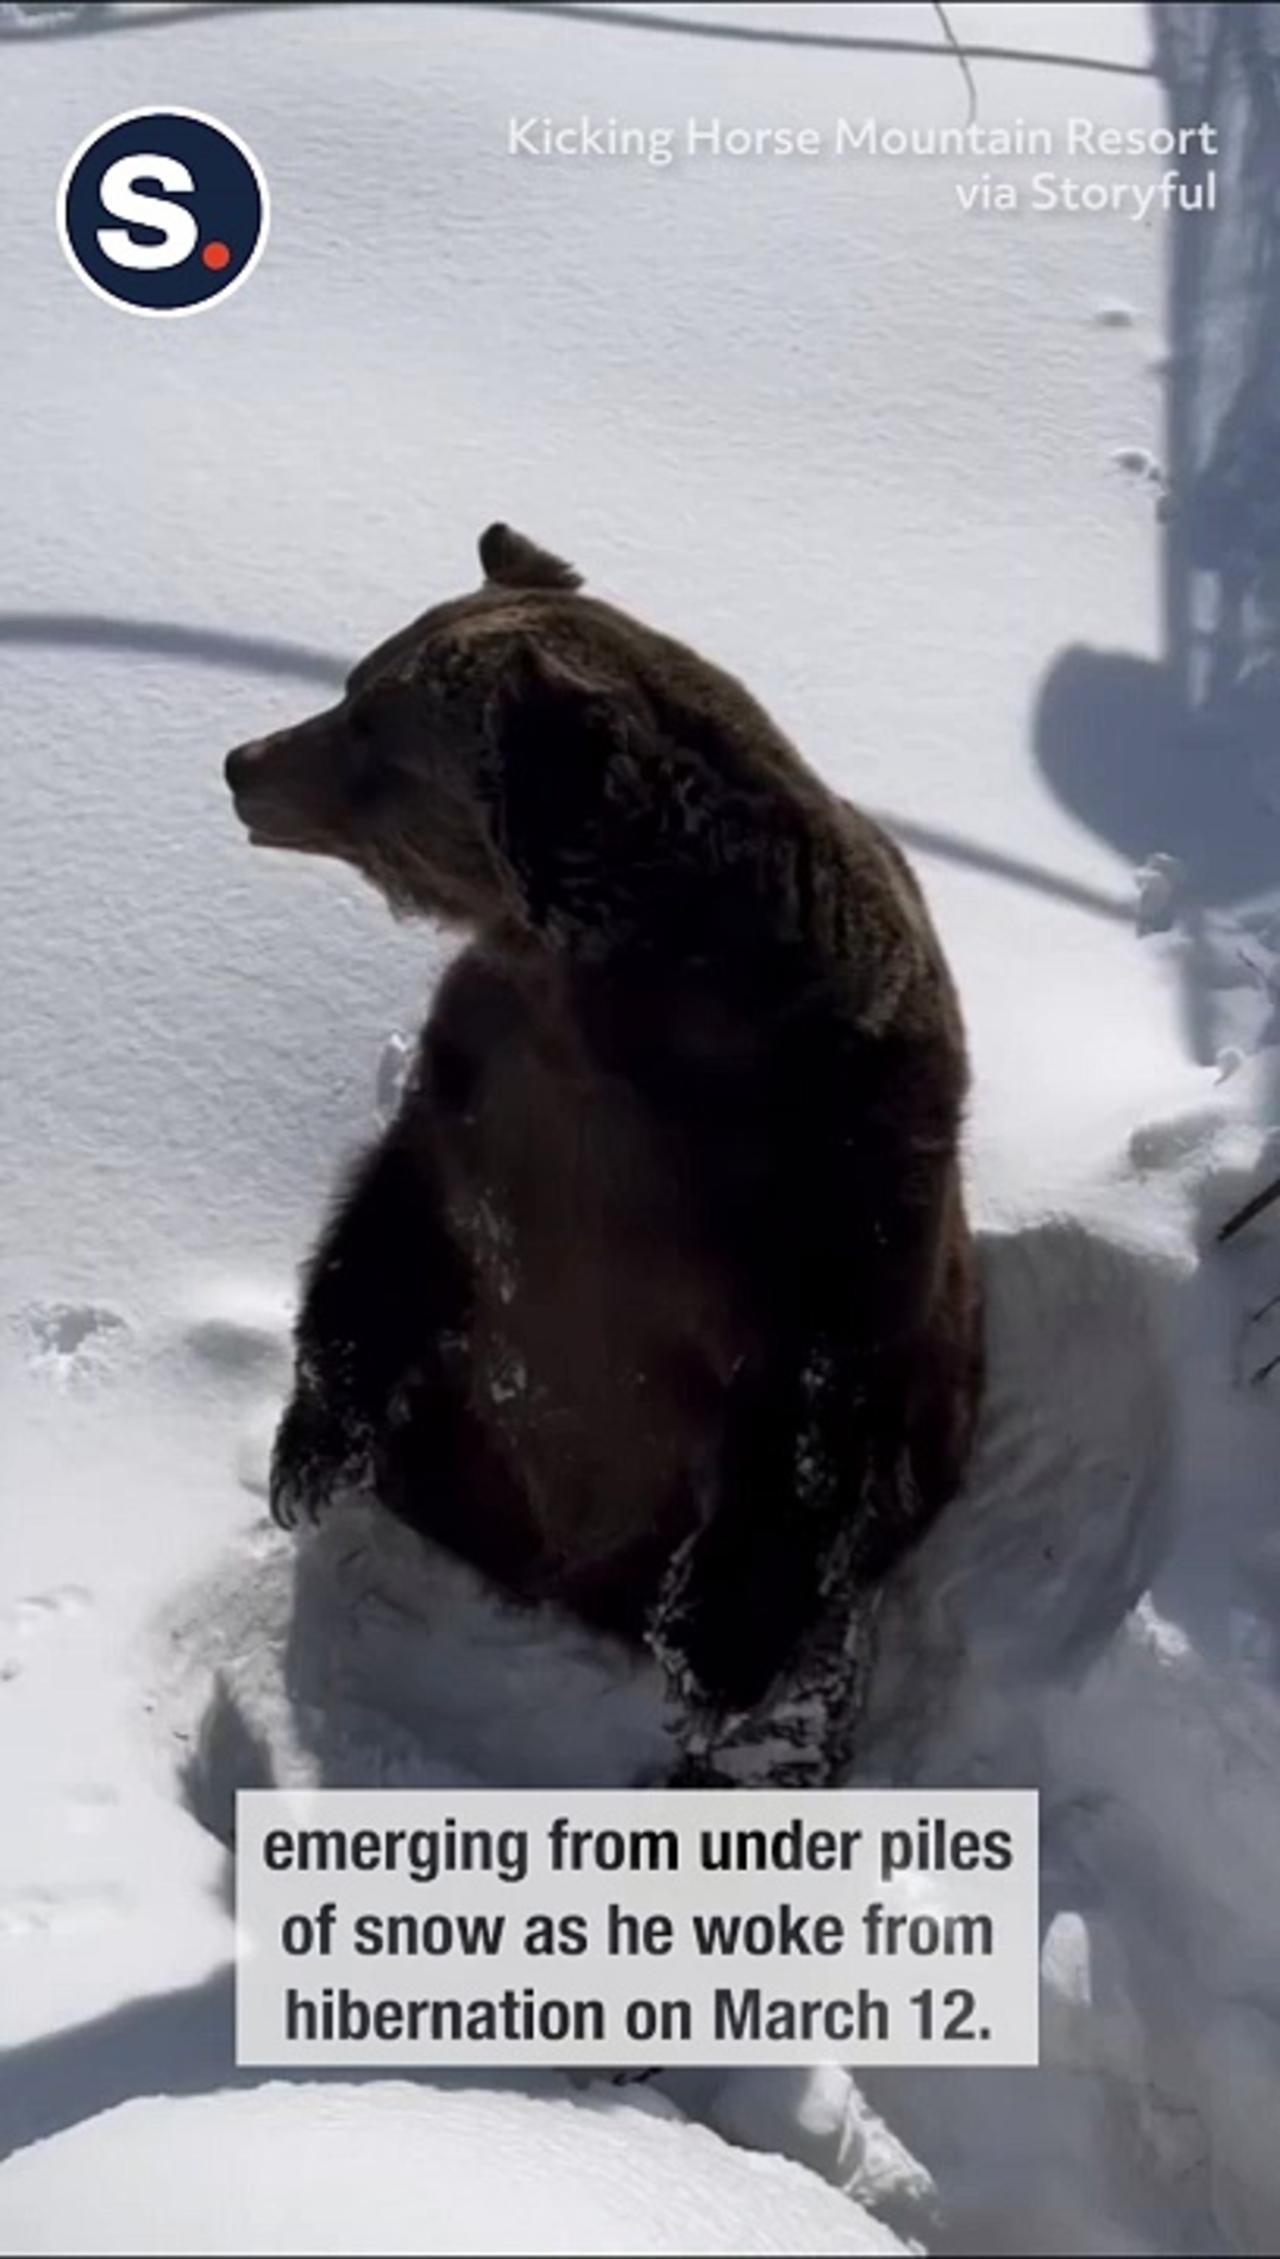 Beloved Grizzly Emerges From Hibernation at Canadian Ski Resort